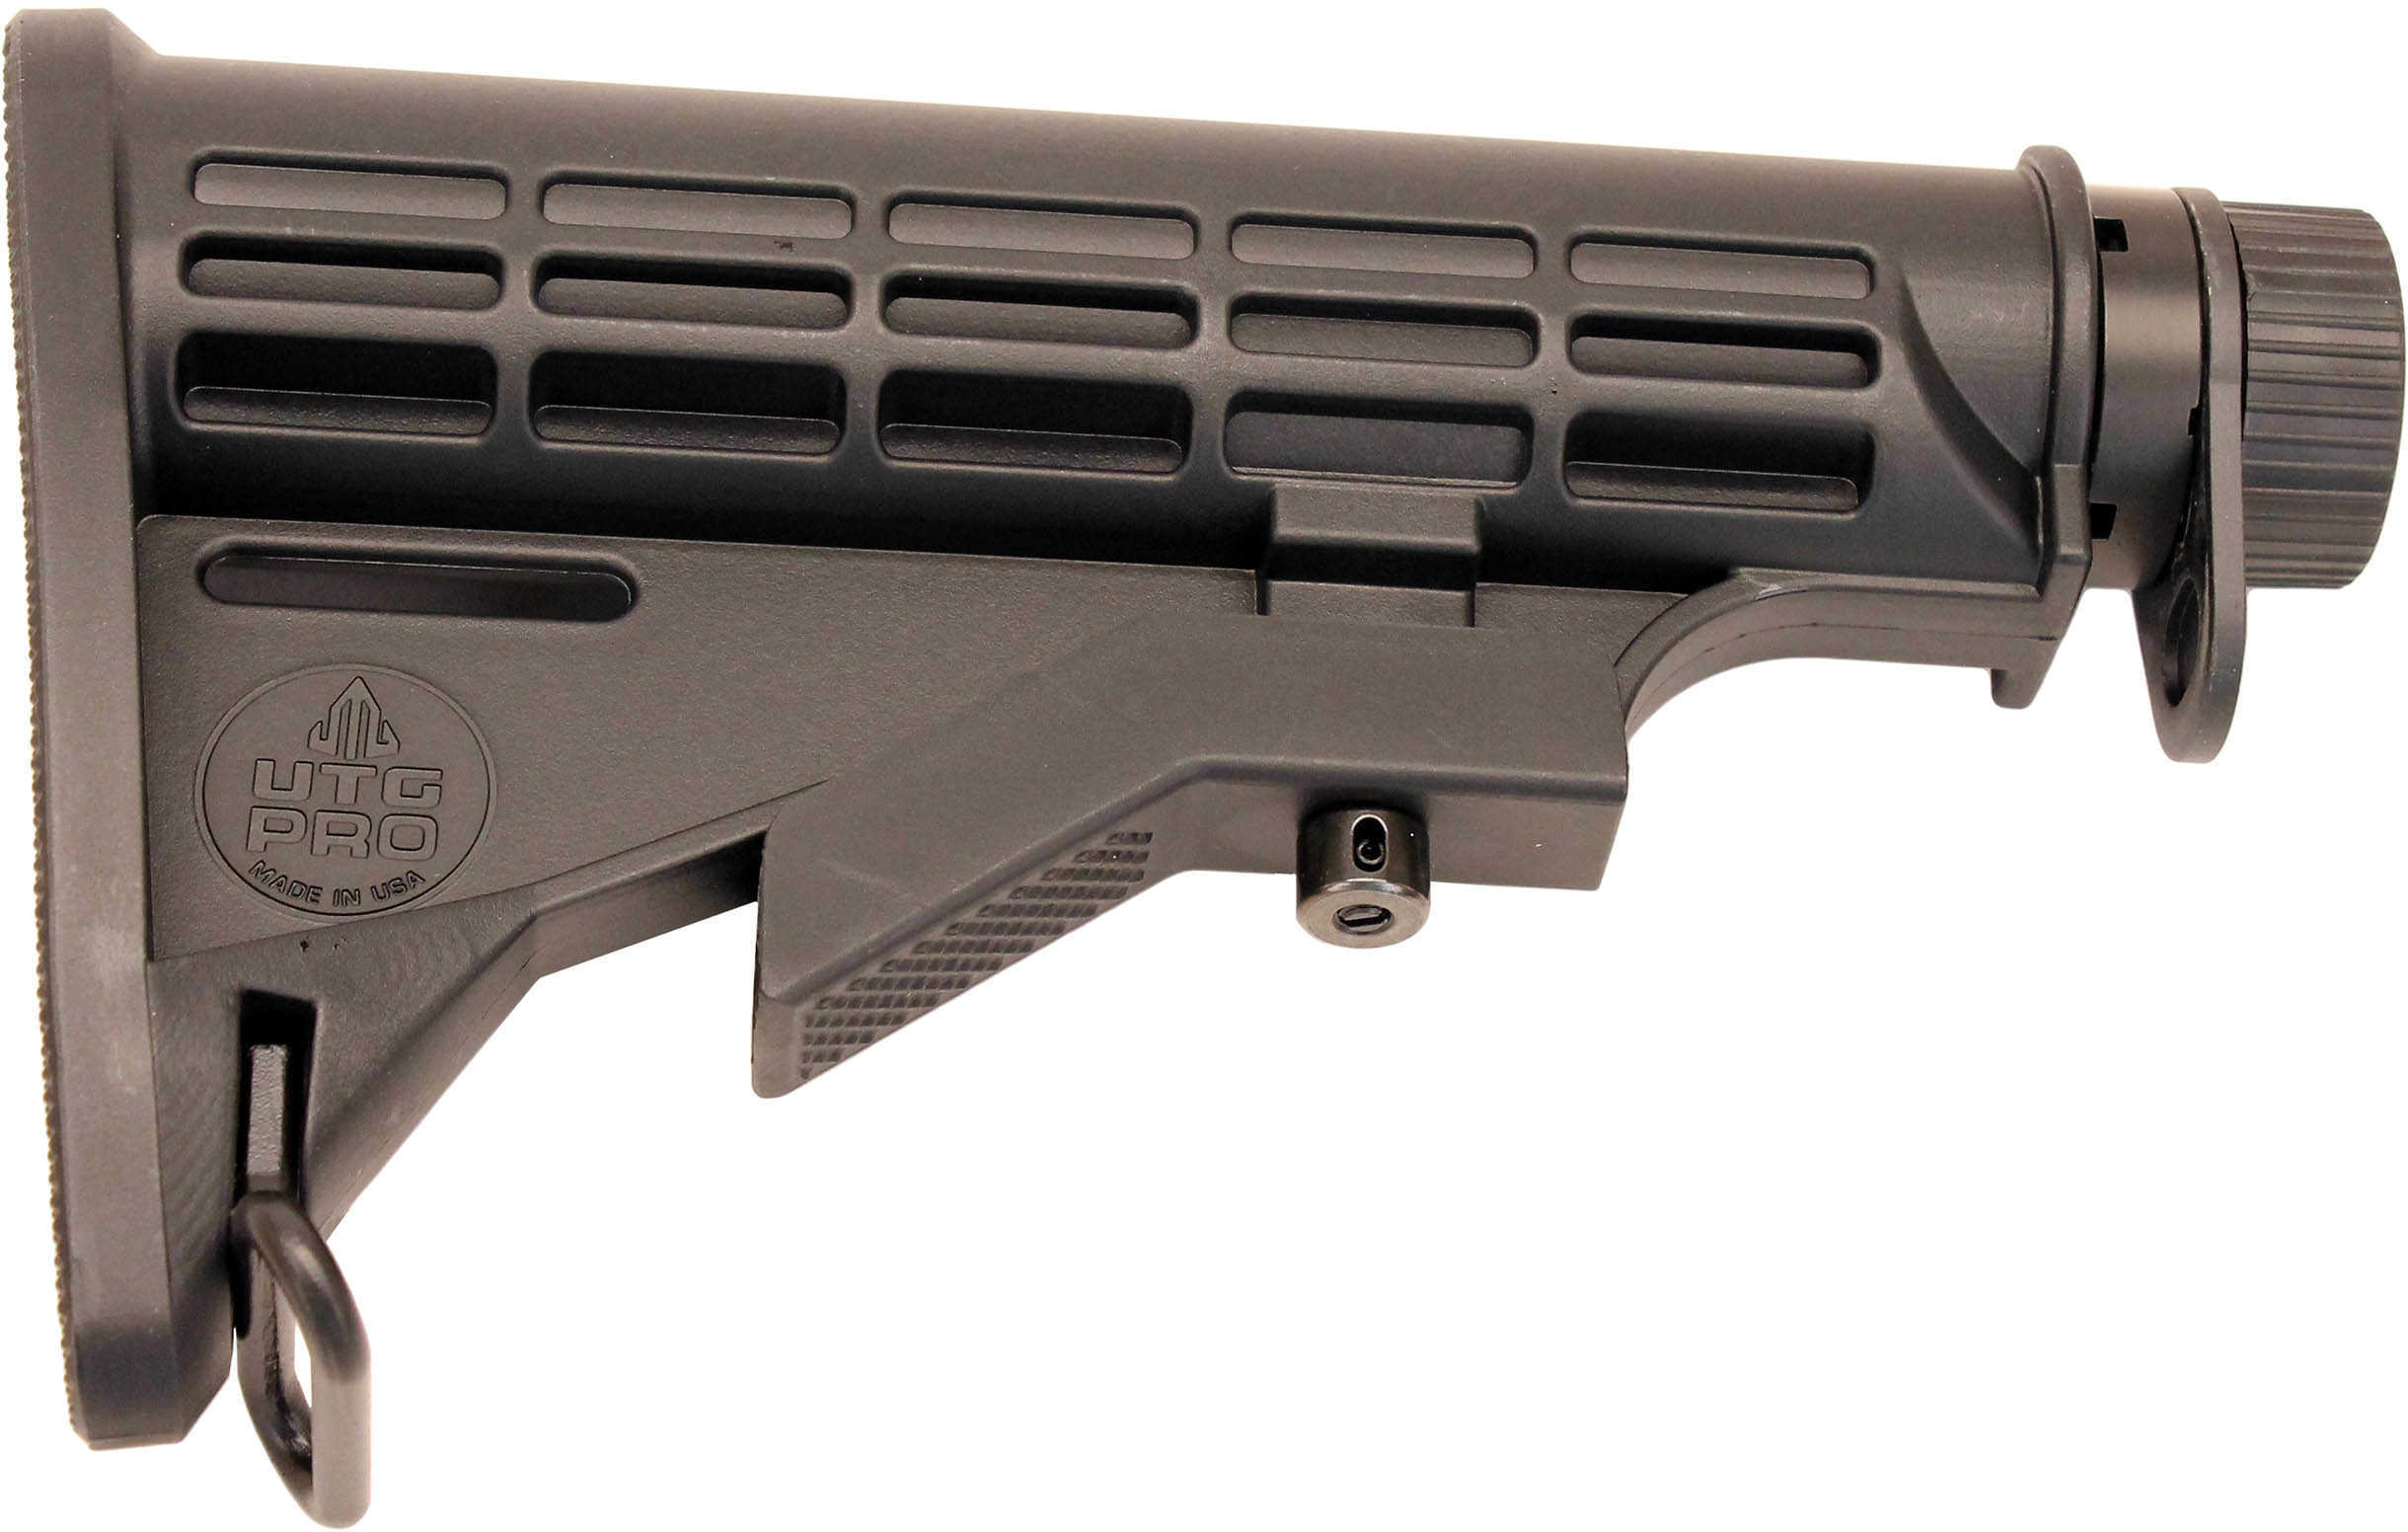 UTG Pro RBU6Bm Mil-Spec Rifle AR15/M16 Buttstock Kit Polymer/Aluminum Black